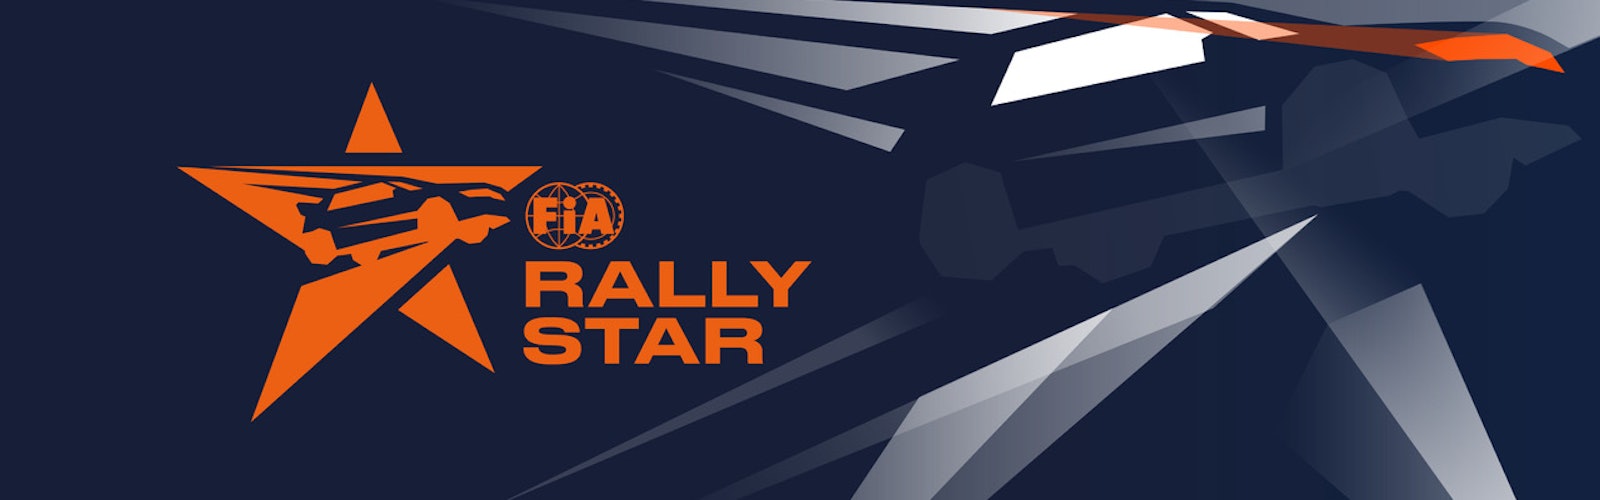 FIA Rally Star logo